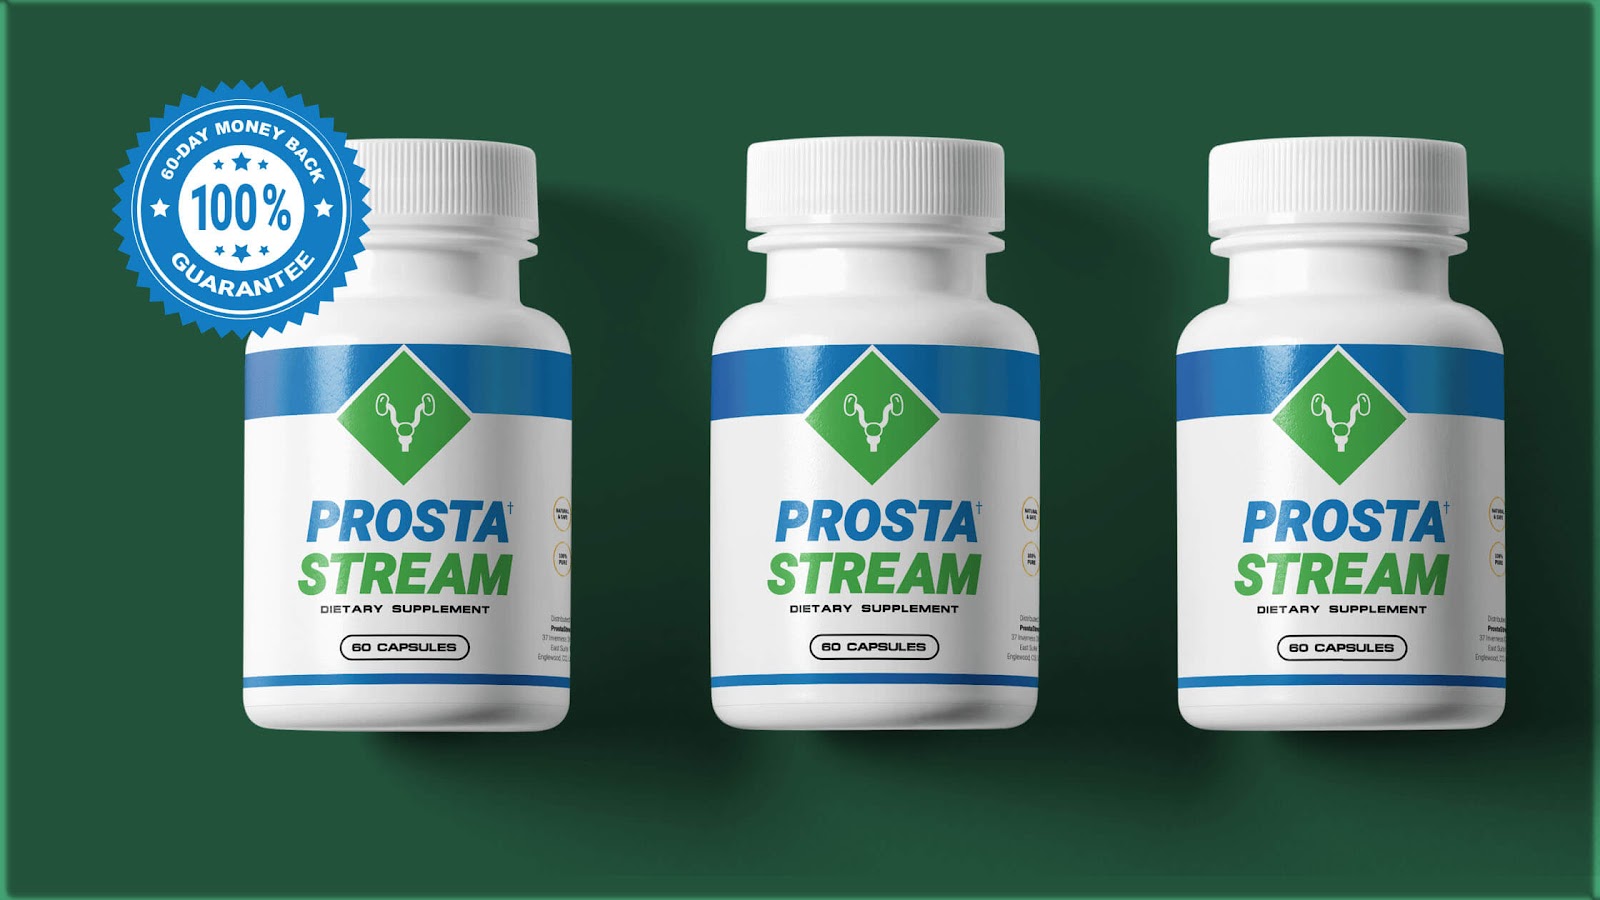  "ProstaStream Supplement"